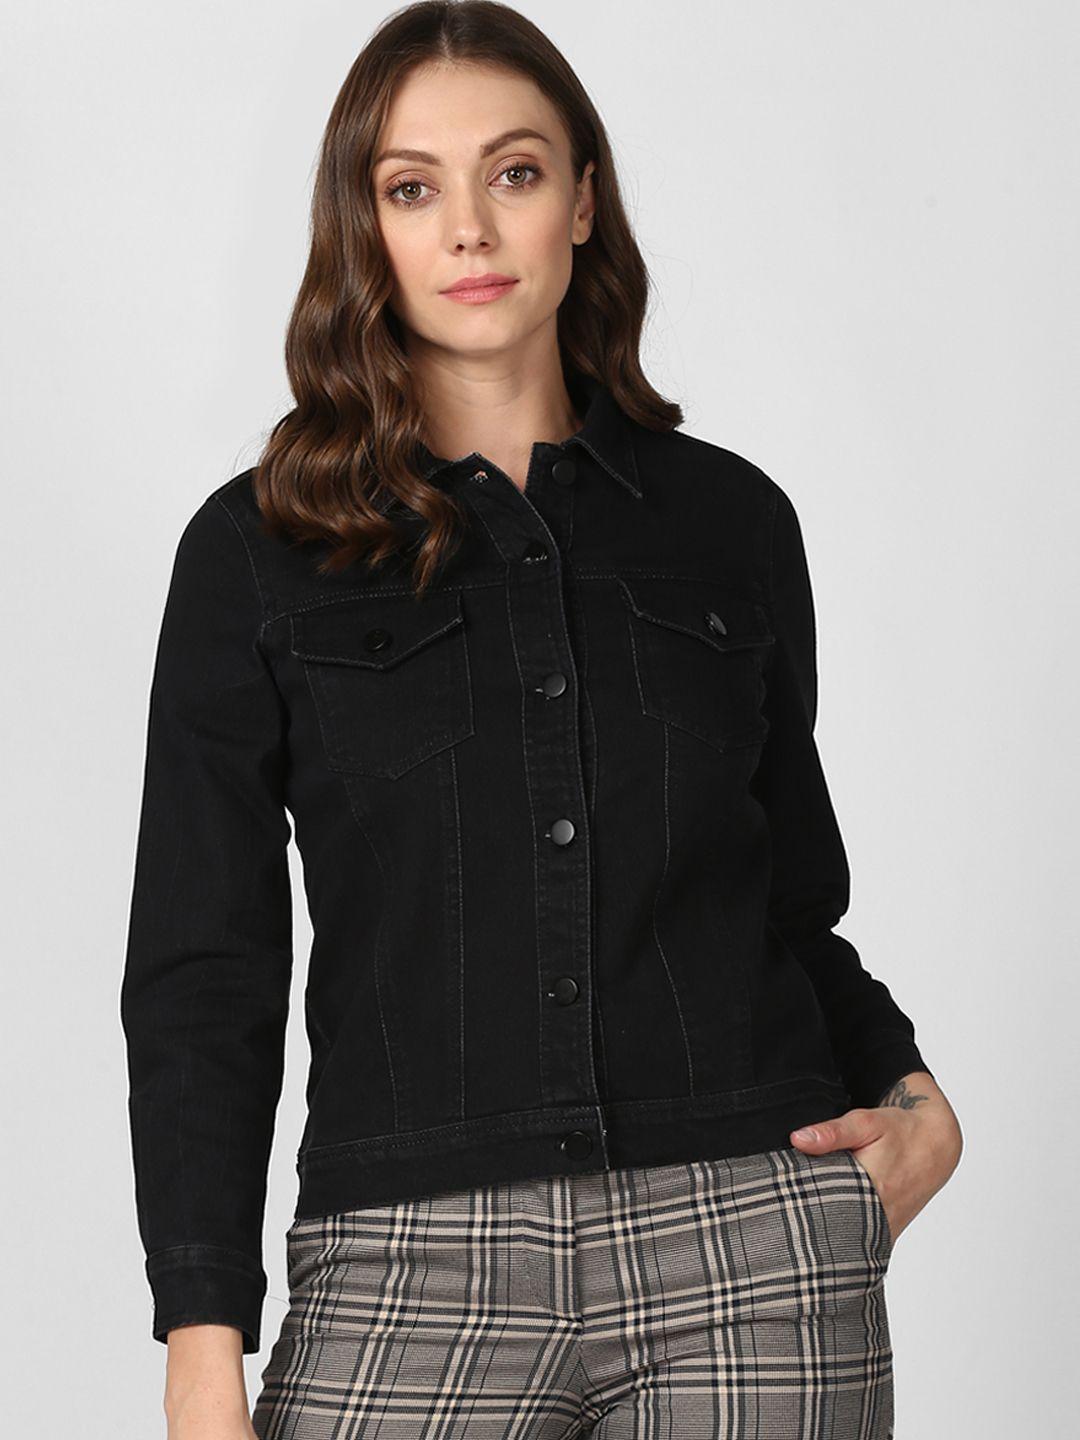 stylestone women black solid denim jacket